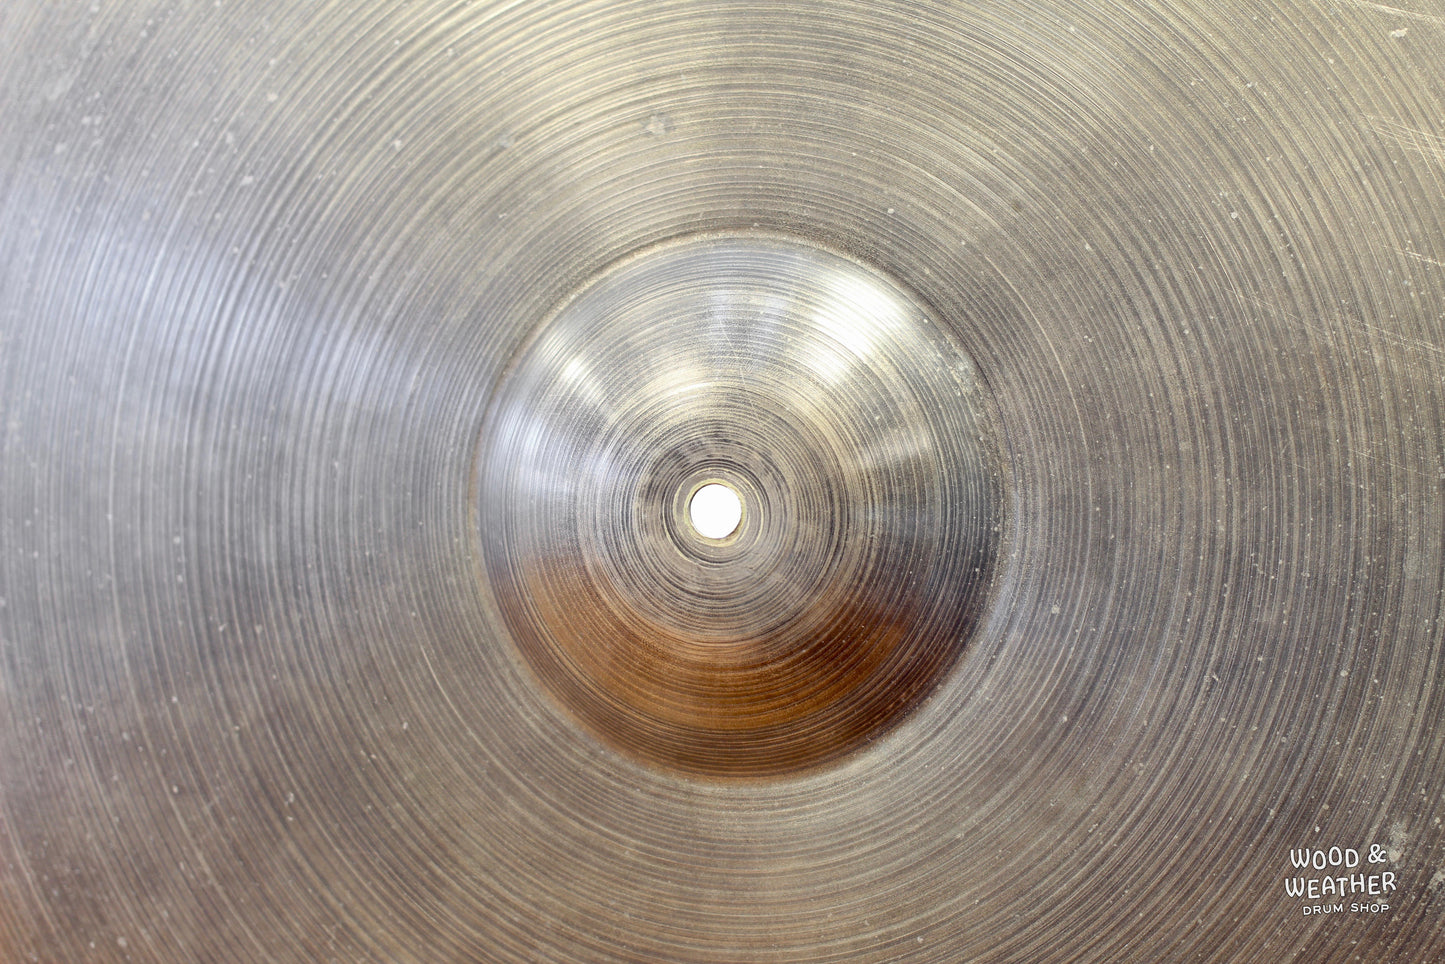 1950s A. Zildjian 22" "Hollow Block" Mystery Ride Cymbal 2590g